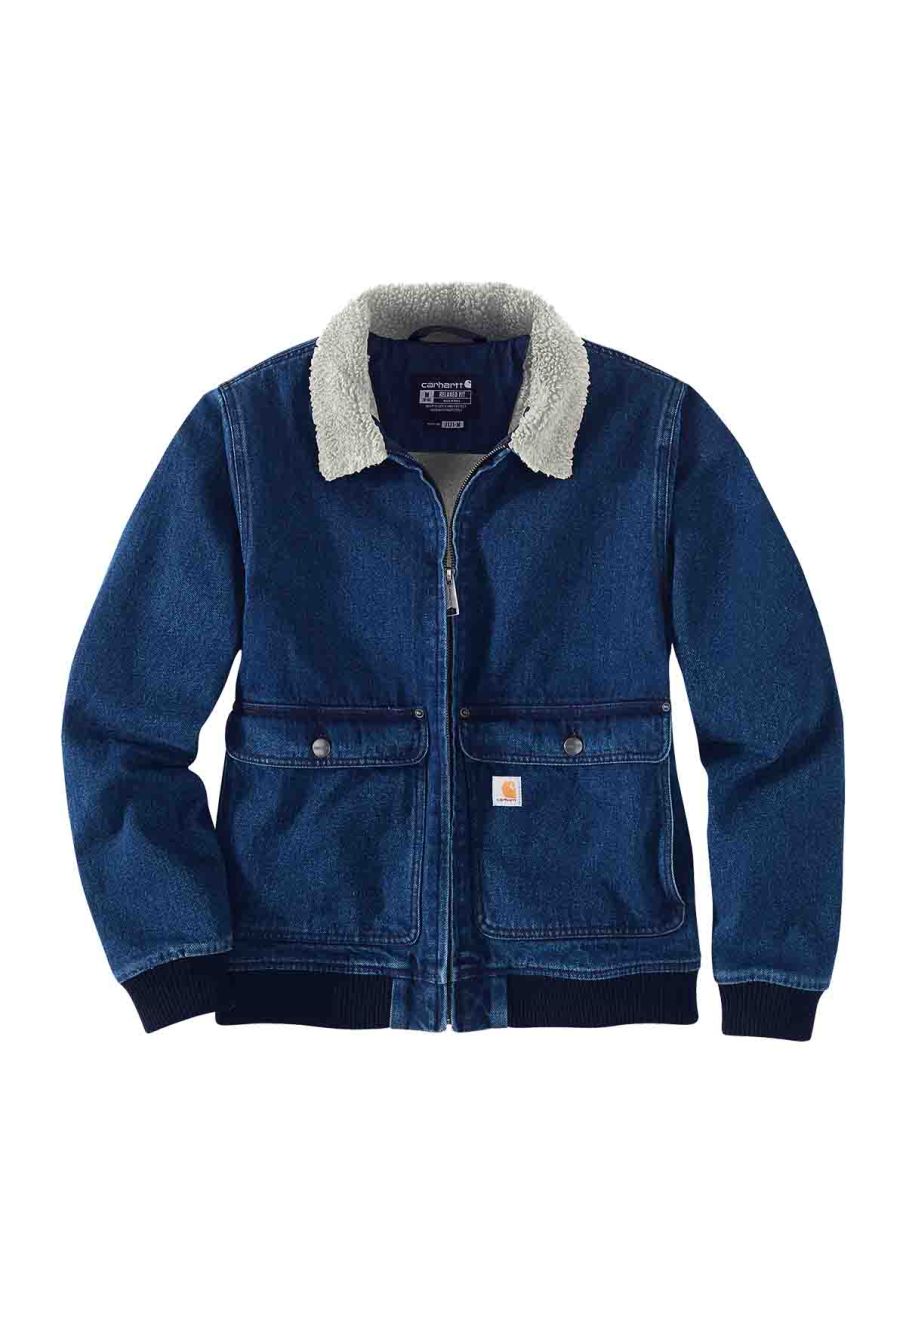 Carhartt Denim-Sherpa, jeans jacket women Color: Blue (H87) Size